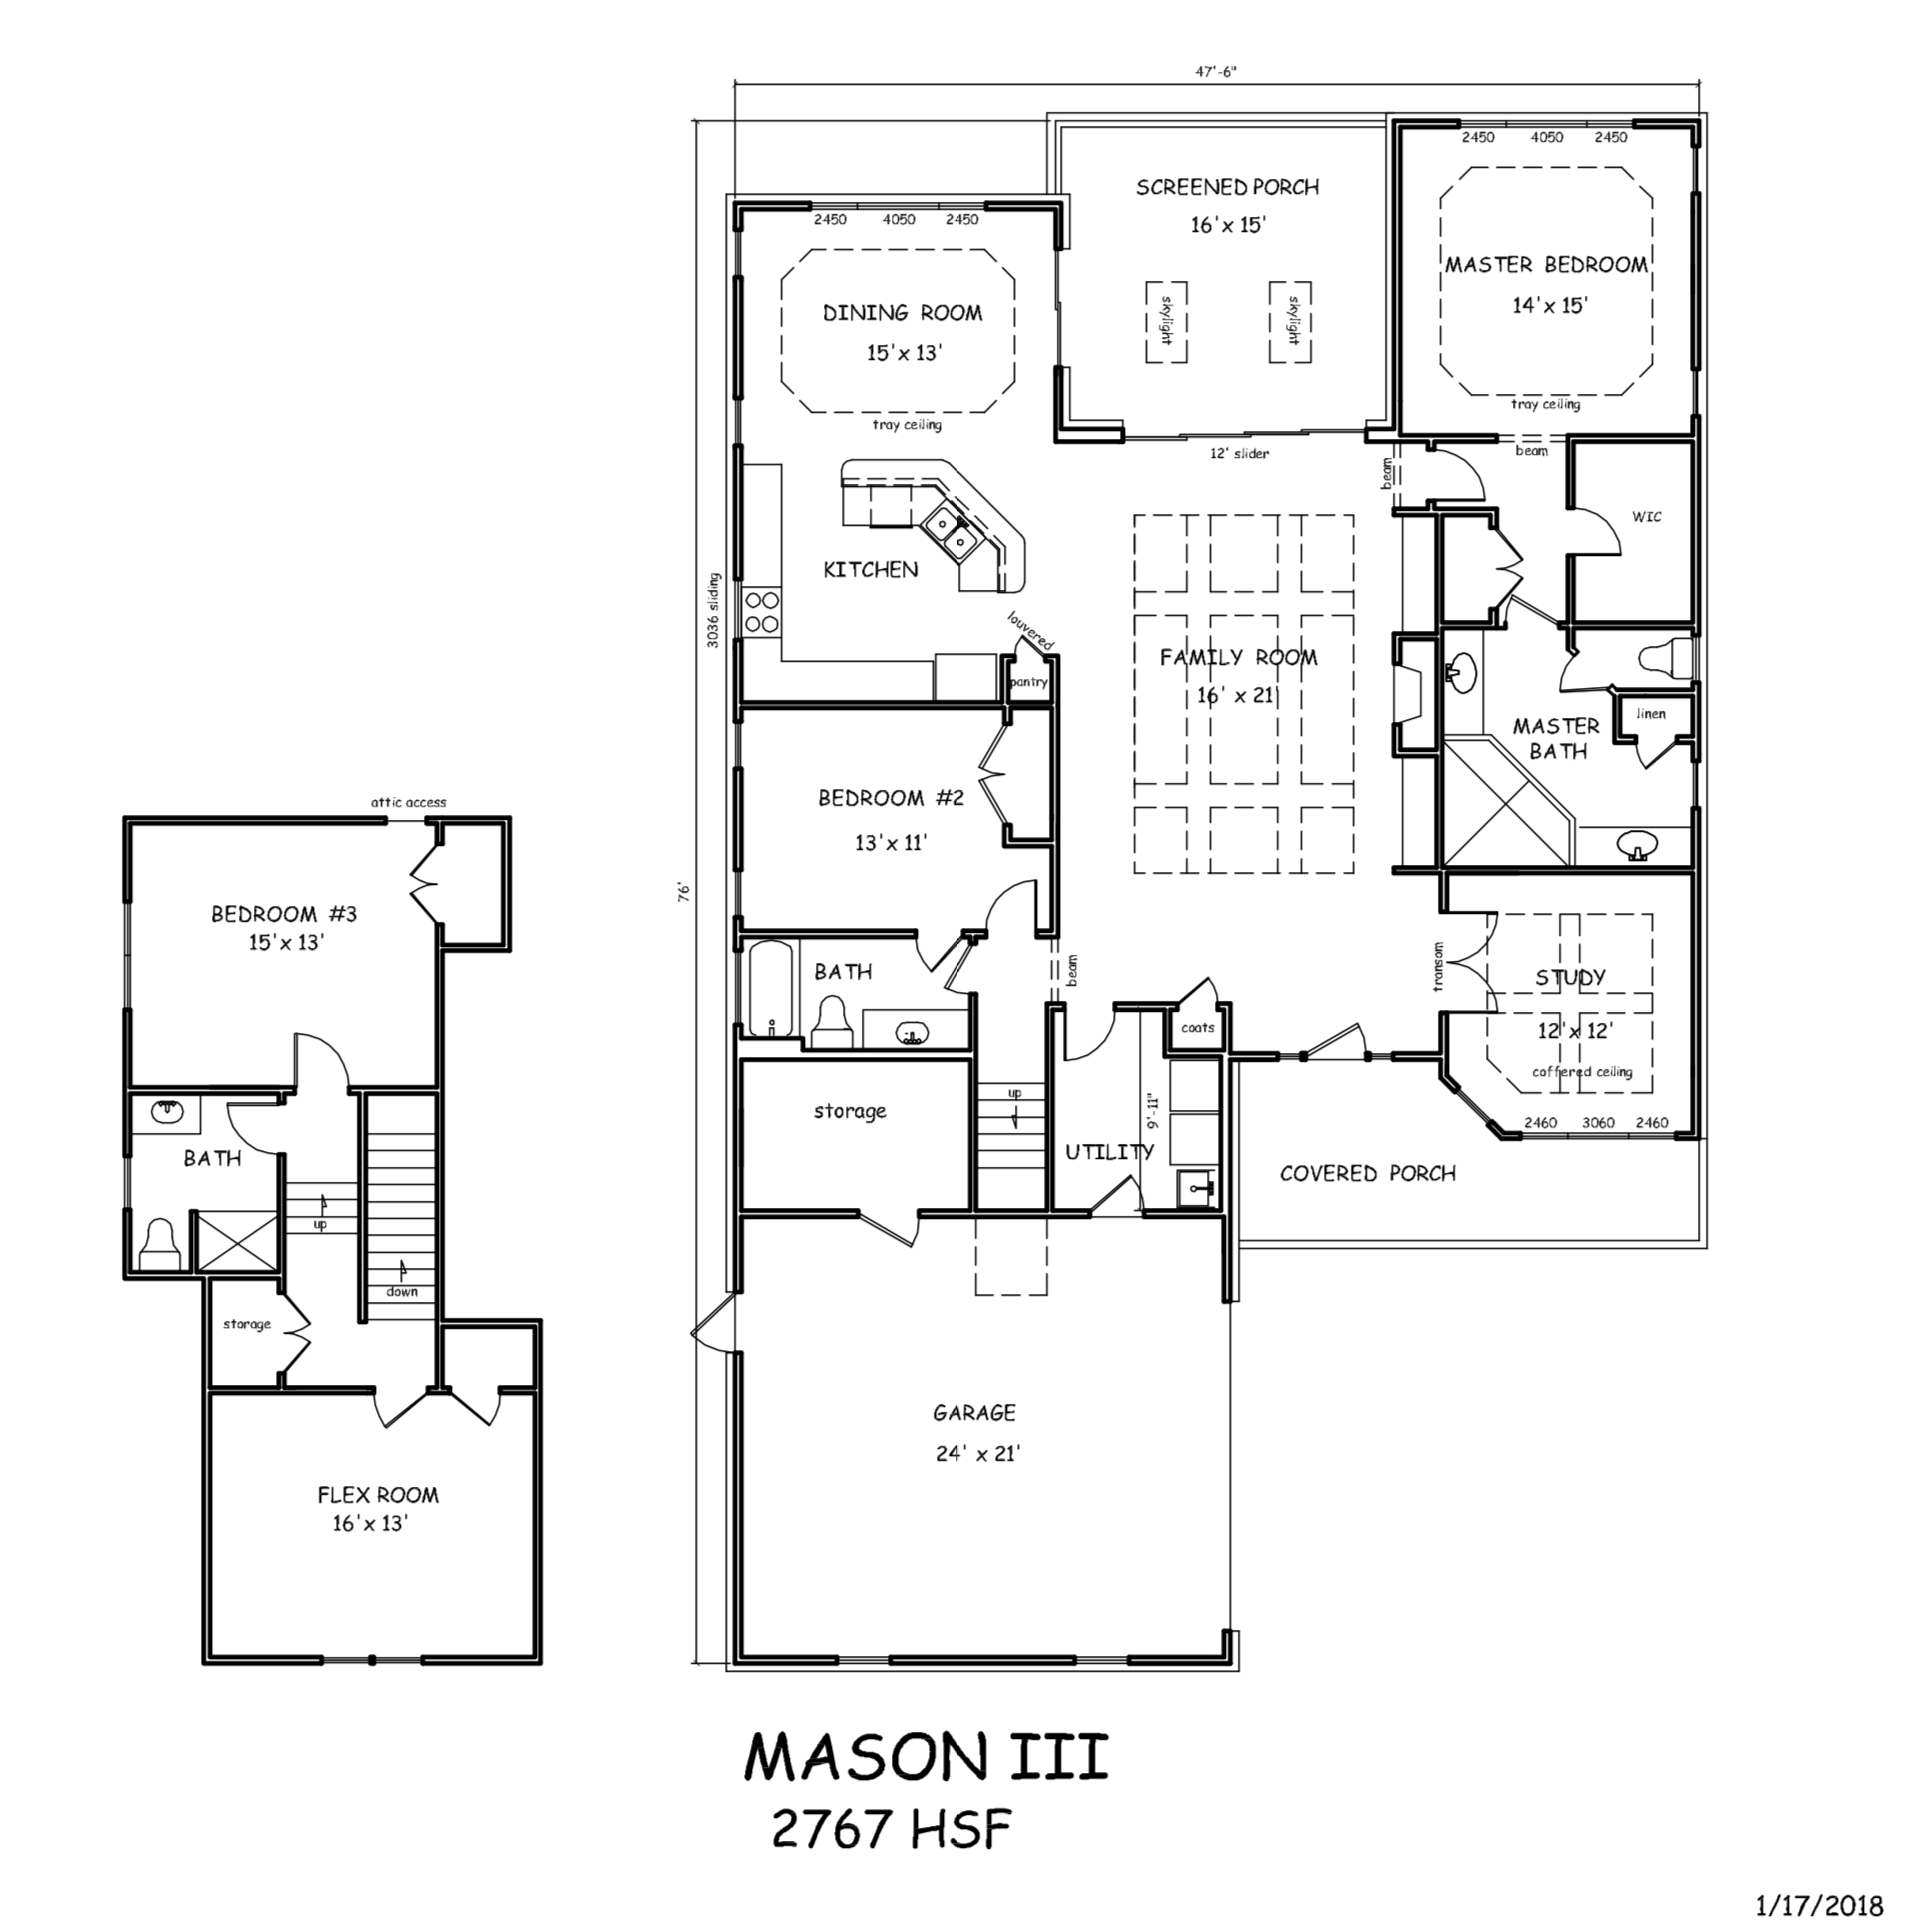 Mason III floor plan image